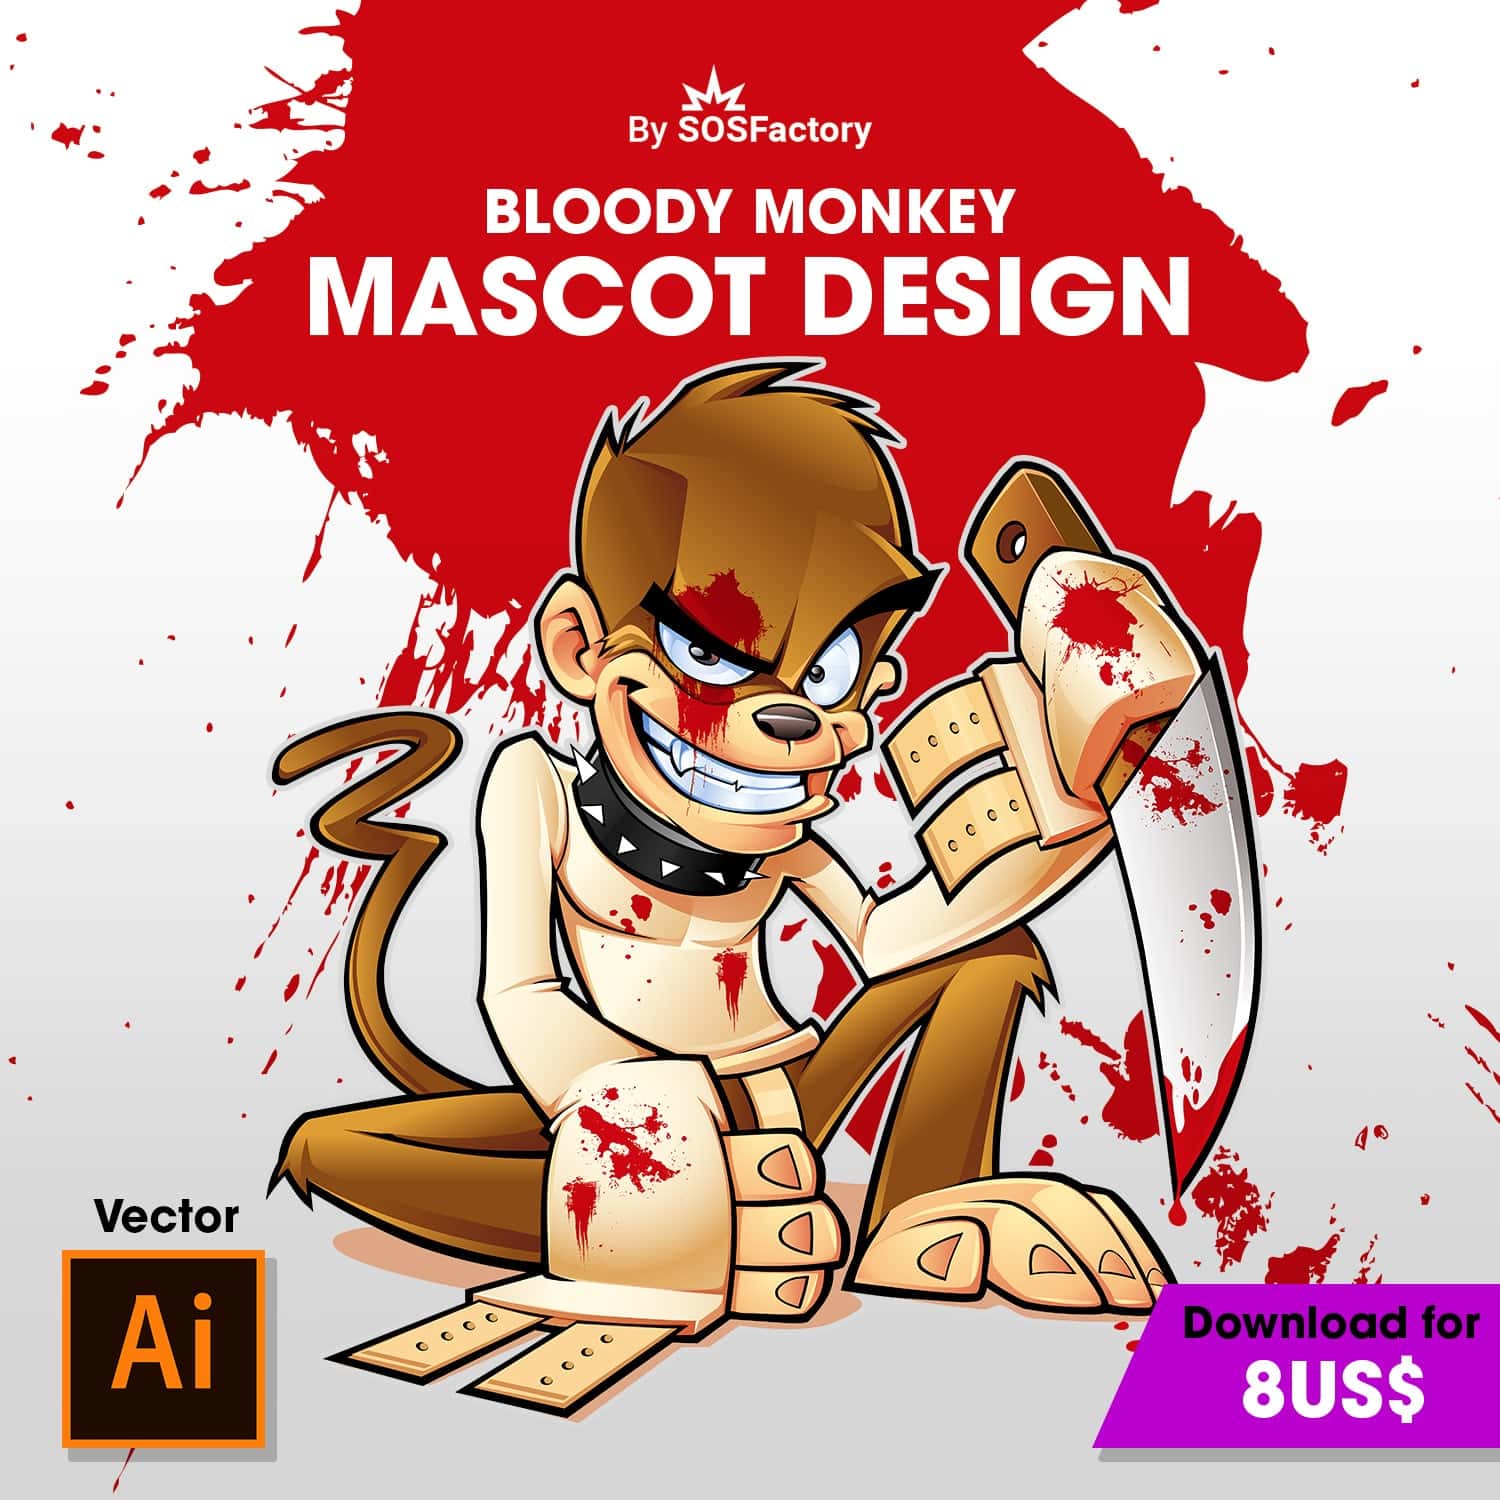 diseño mascota corporativa bloody monkey